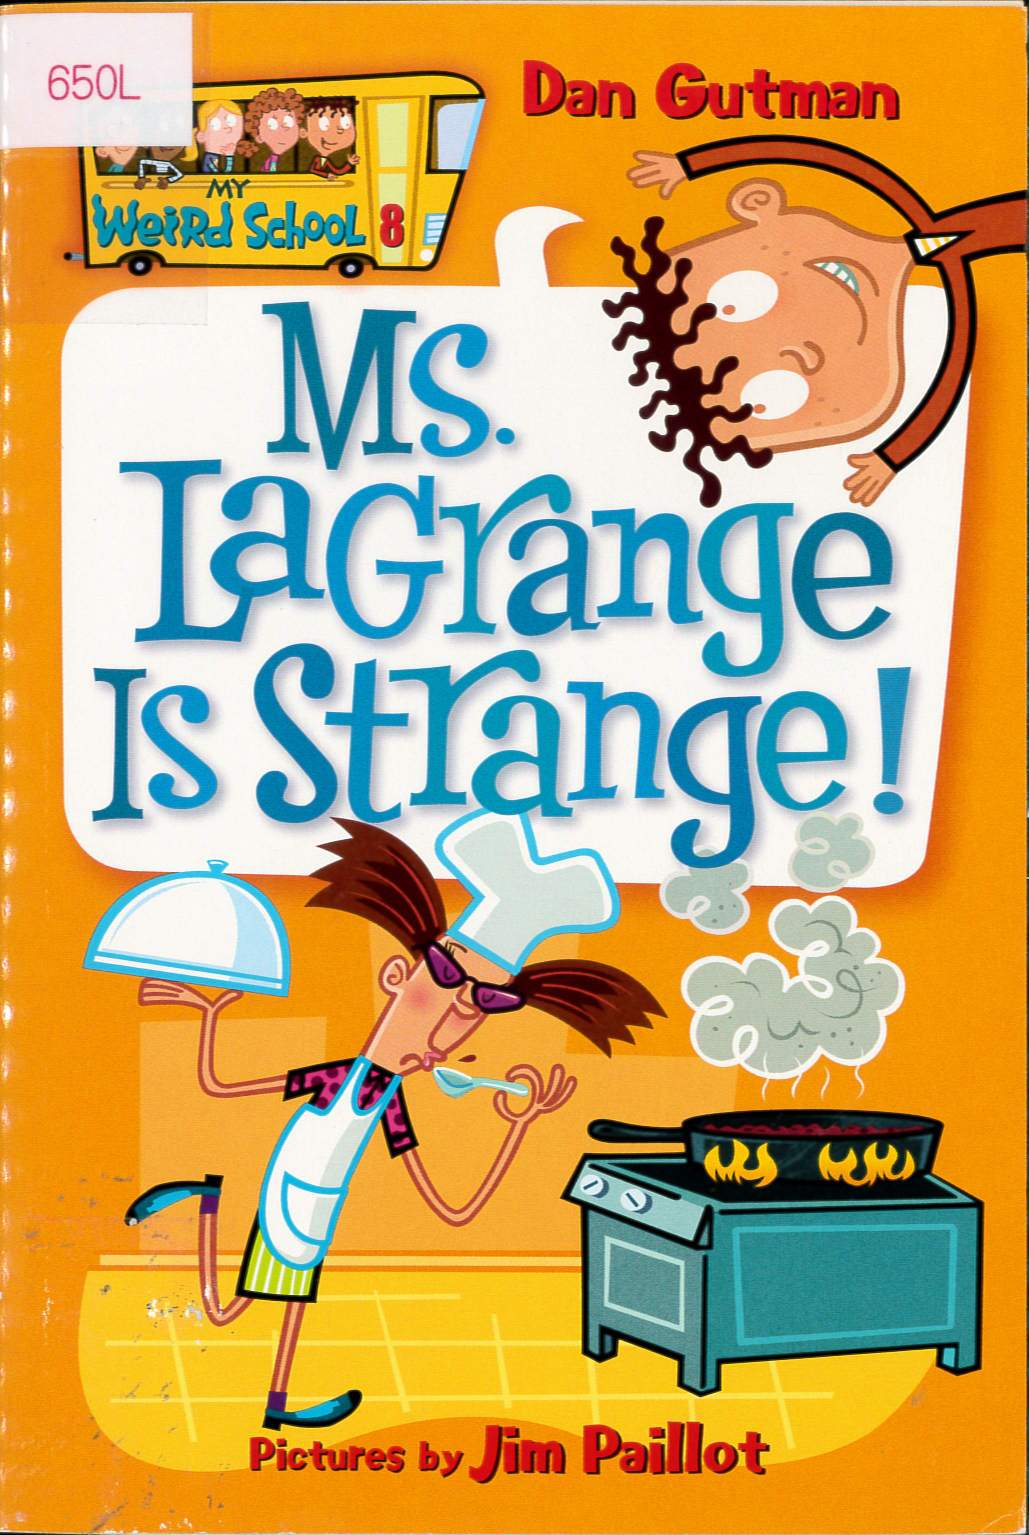 Ms. Lagrange is strange! /